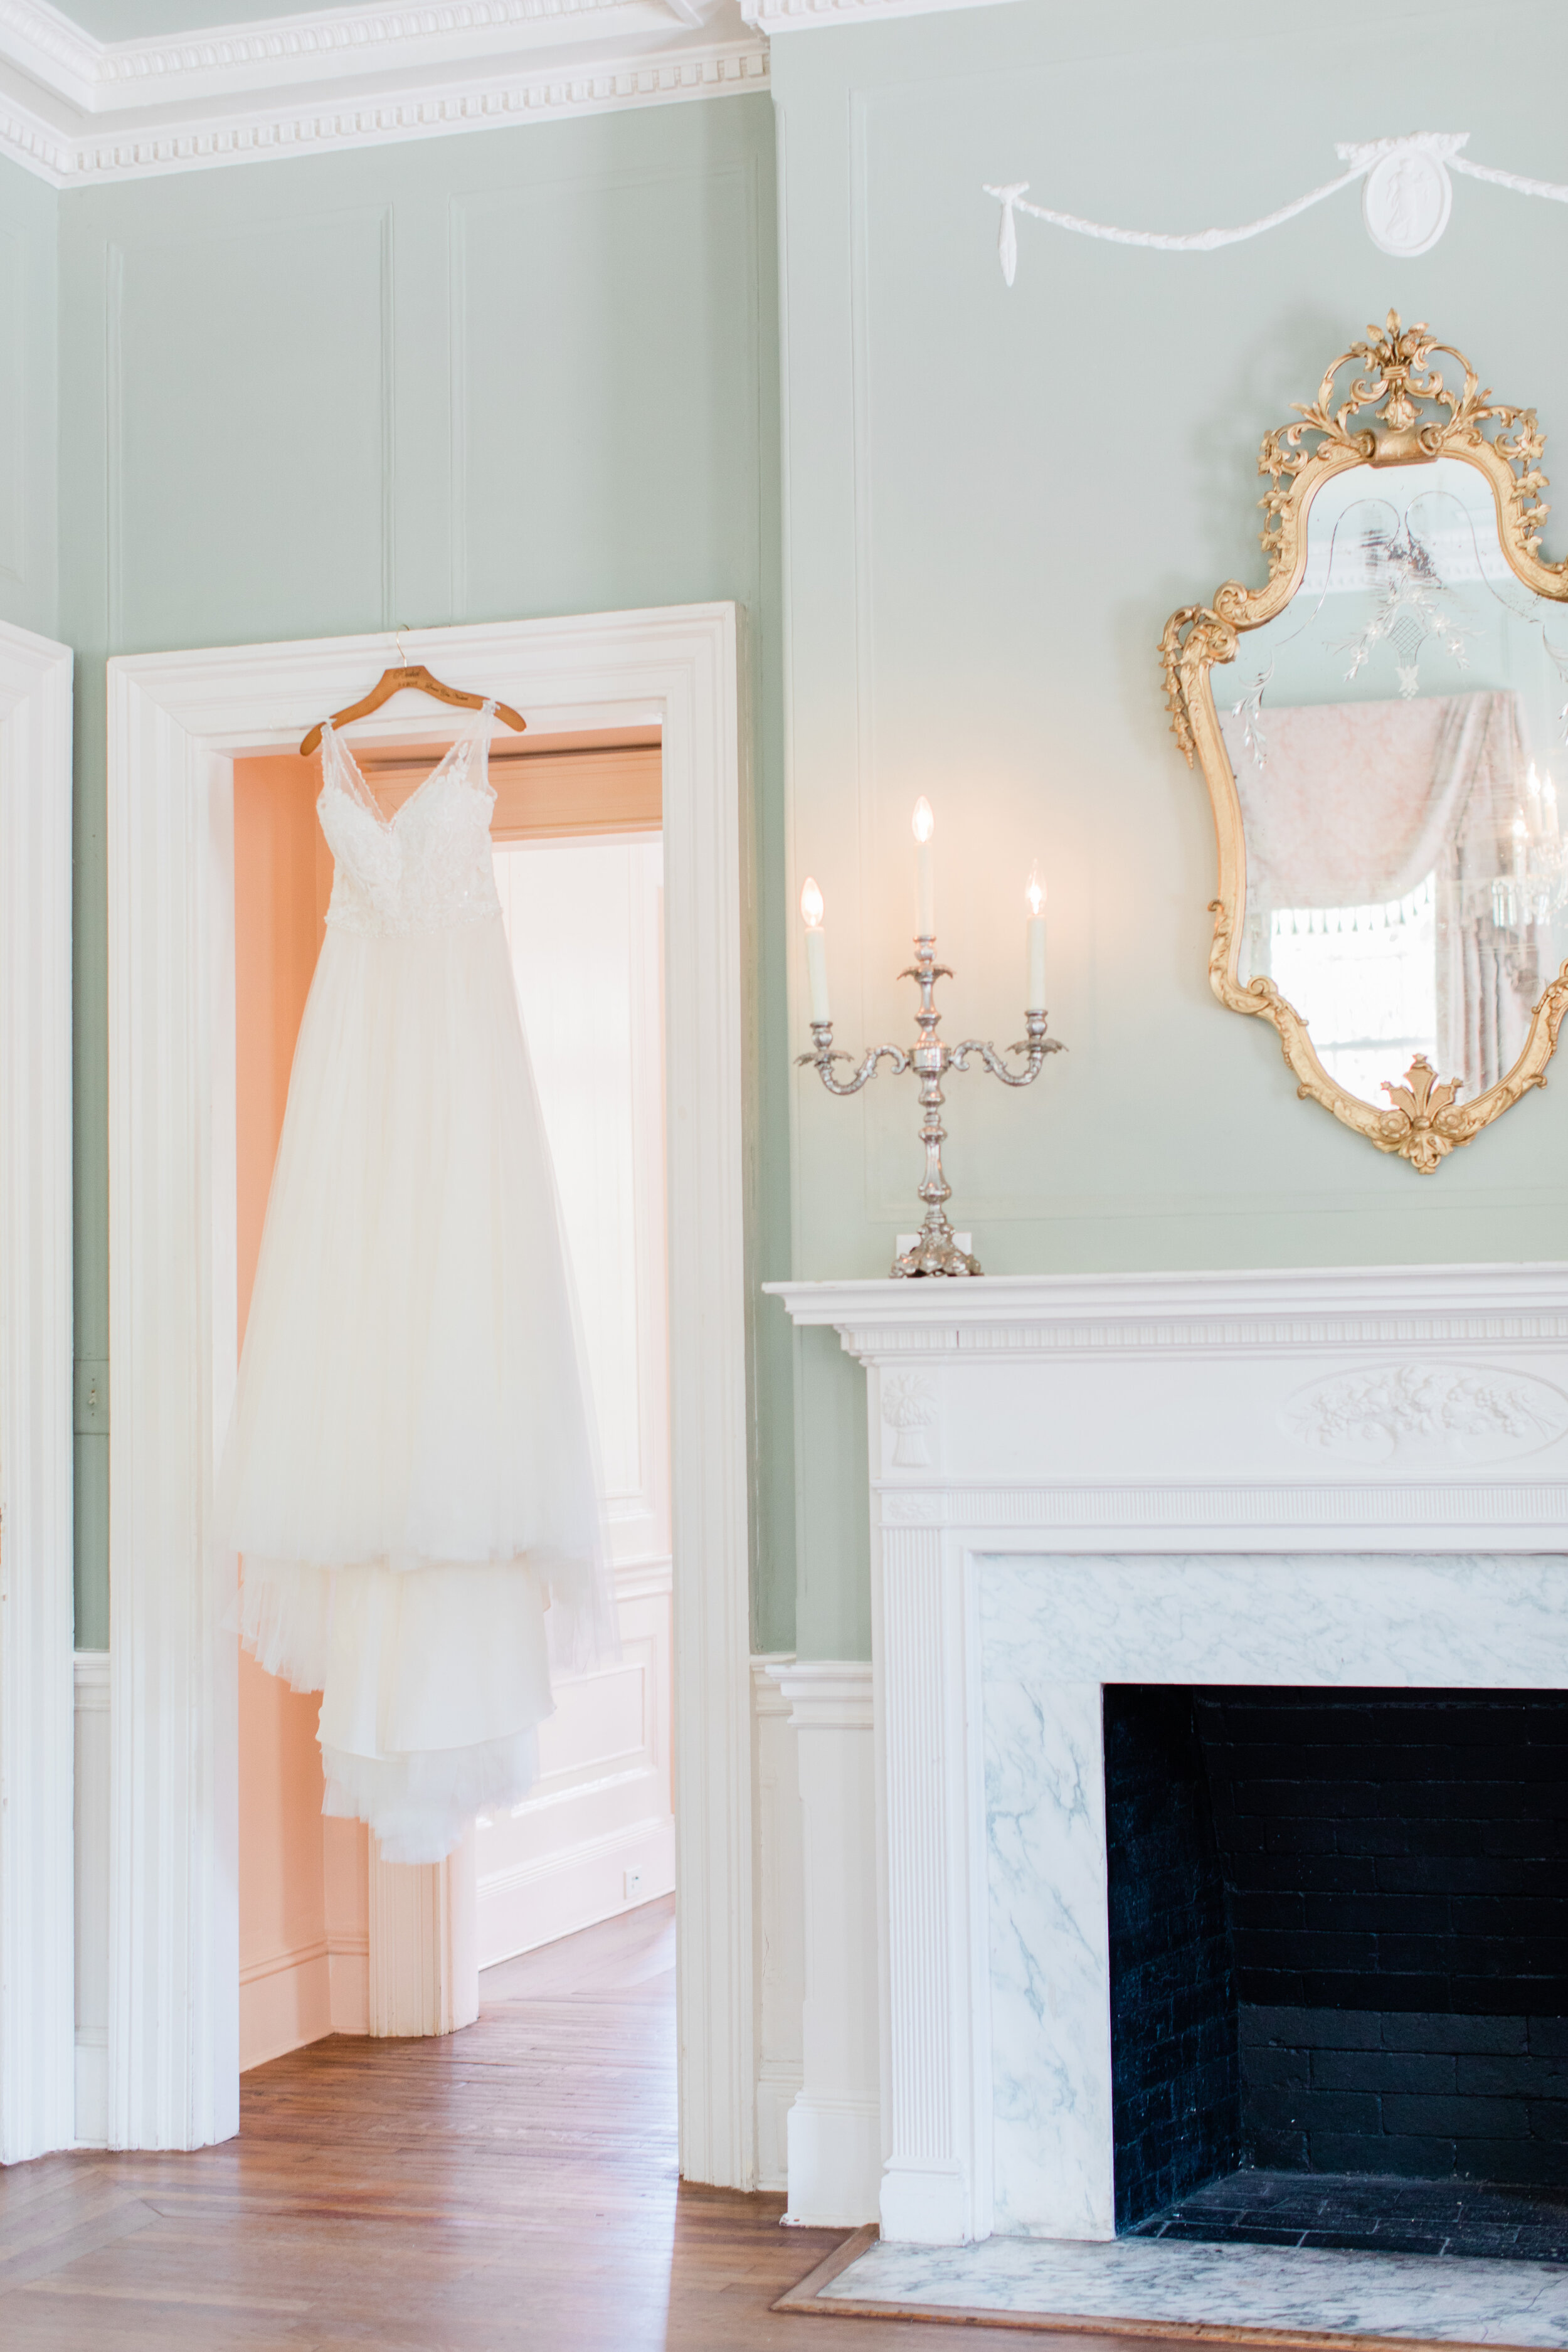 Ford wedding - dress hanging in doorway - Lowdnes Grove - Ava Moore Photography - Charleston Wedding Planner.jpg